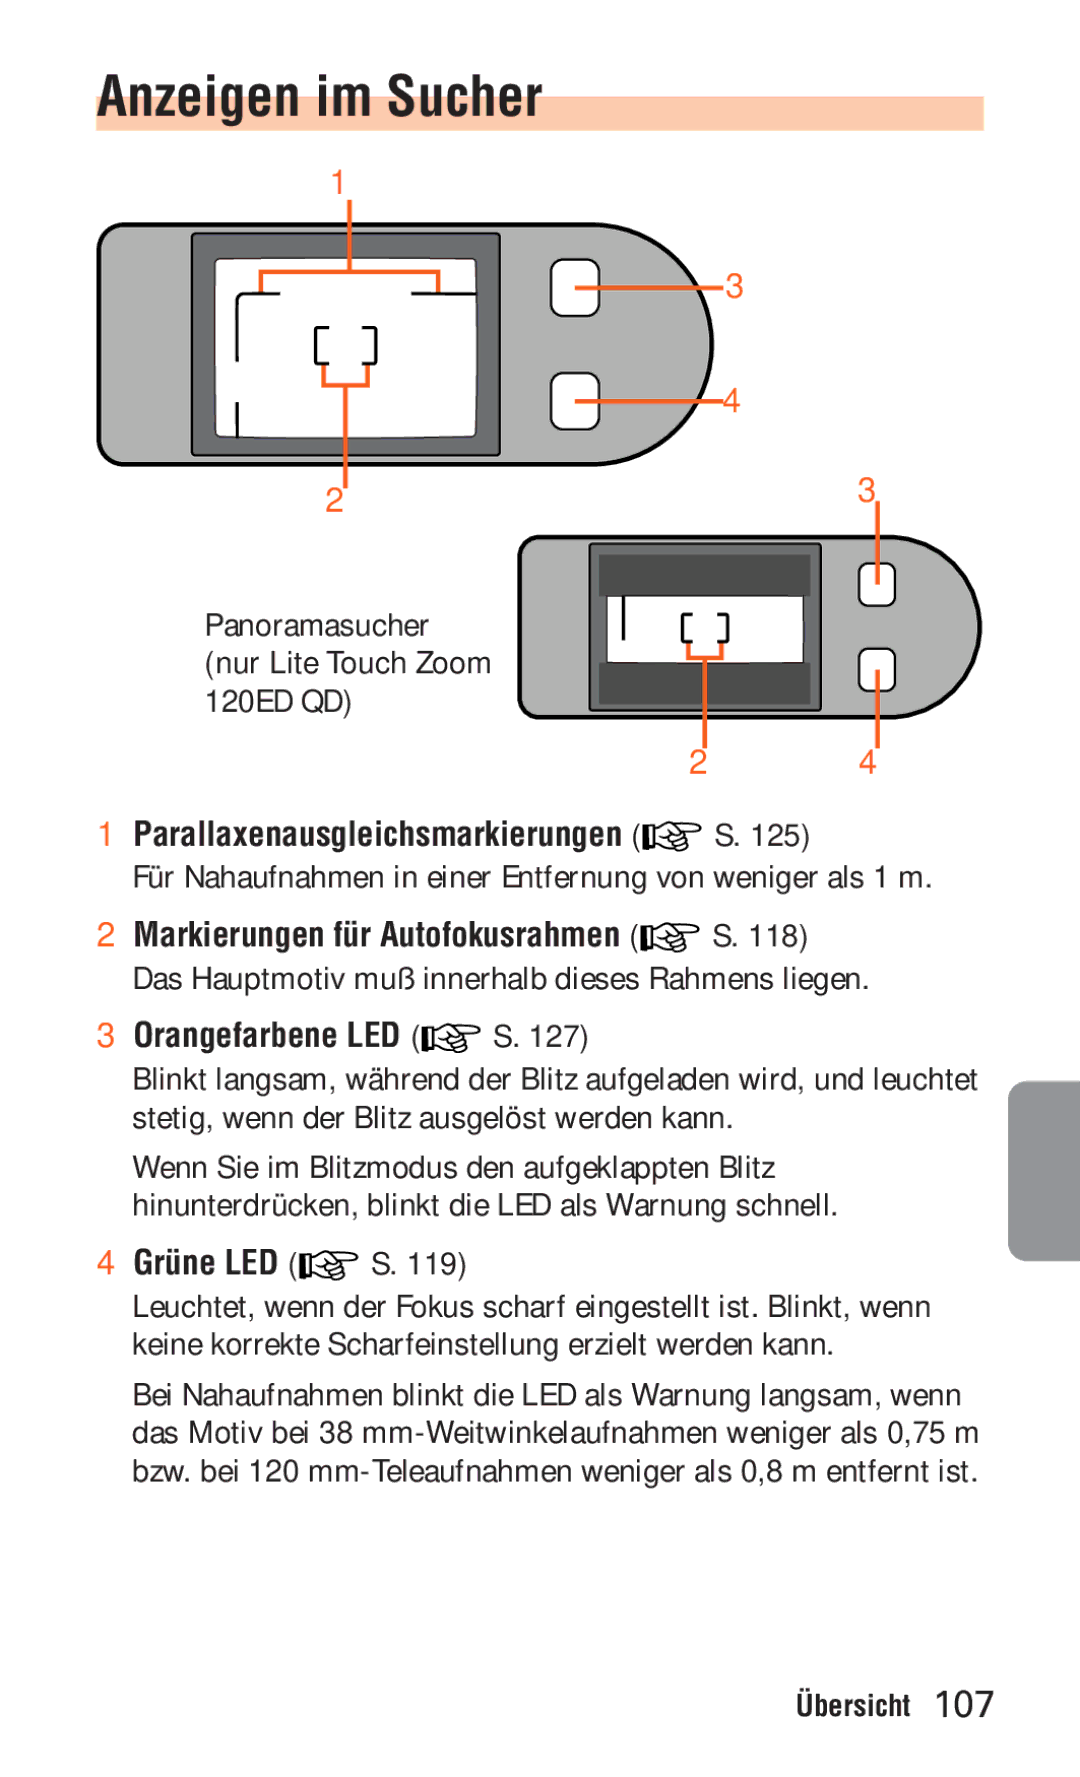 Nikon ED 120 instruction manual Anzeigen im Sucher, 3Orangefarbene LED, 4Grüne LED 